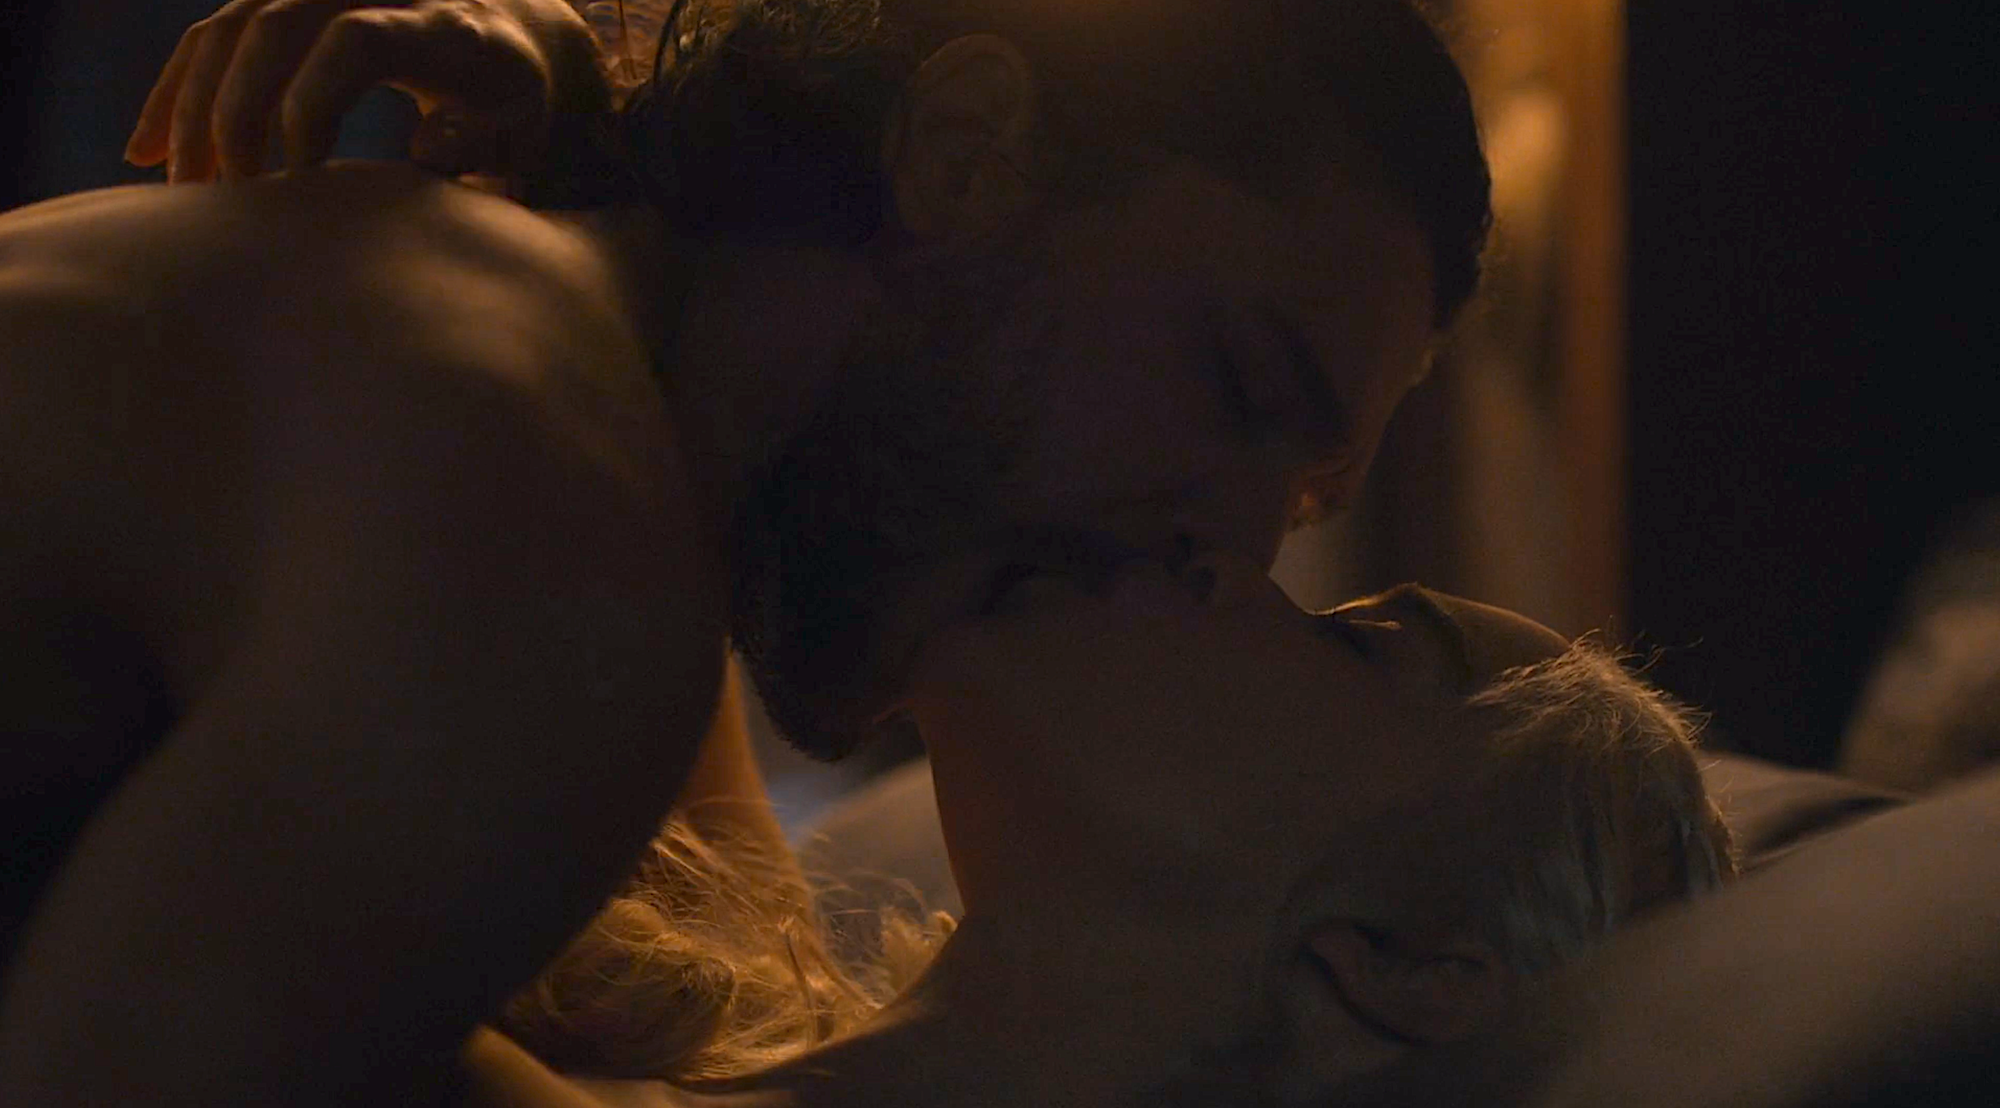 Jaime lannister inscest sex scene bran